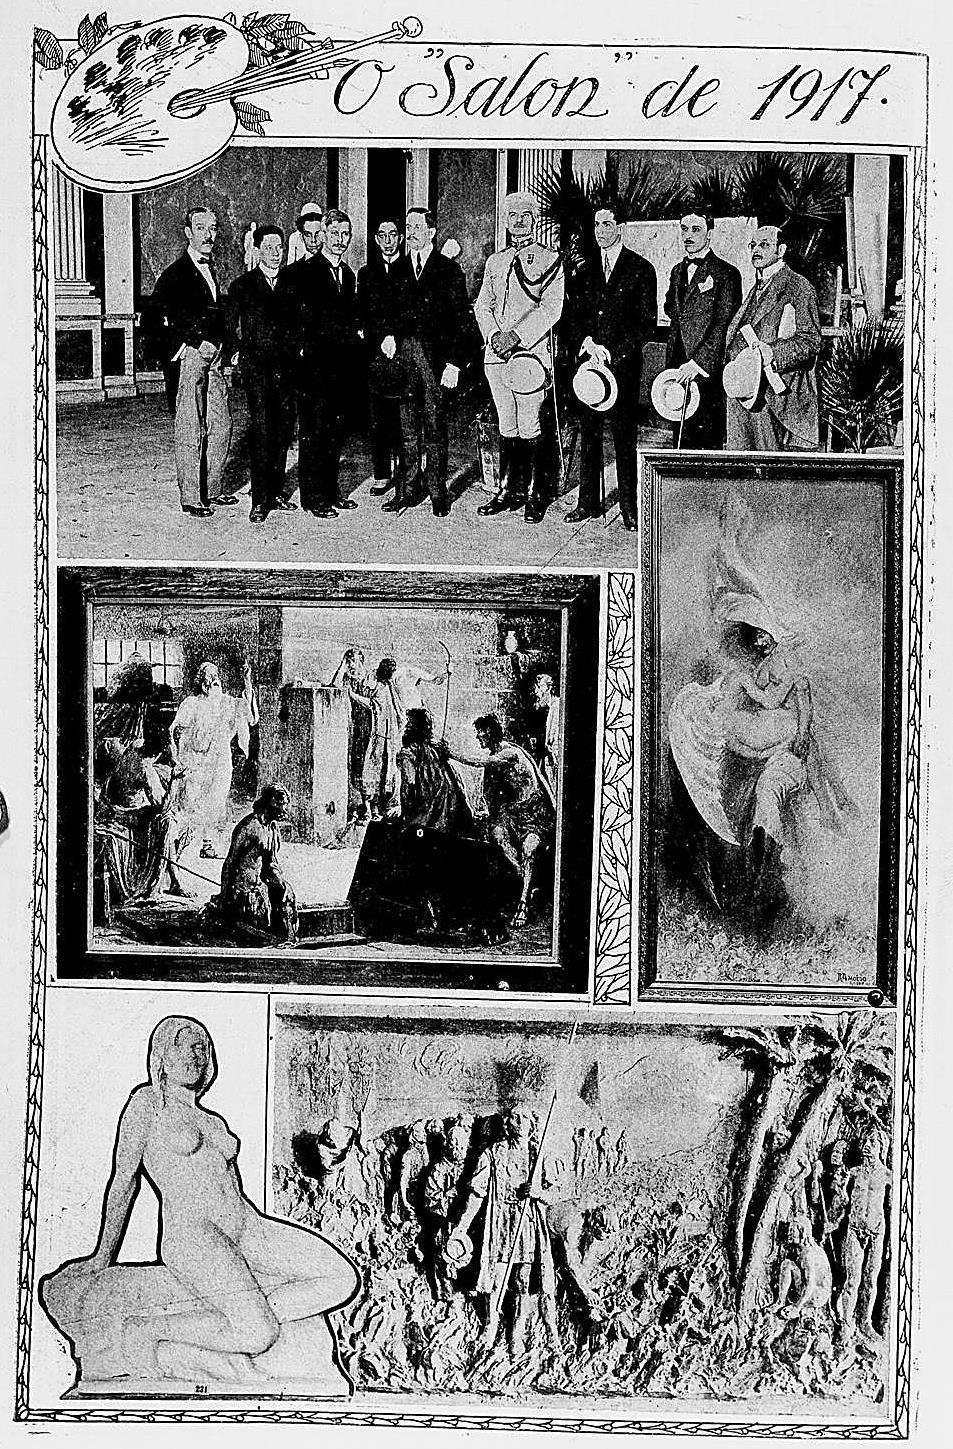 Figura 26: Revista da Semana, 1917.